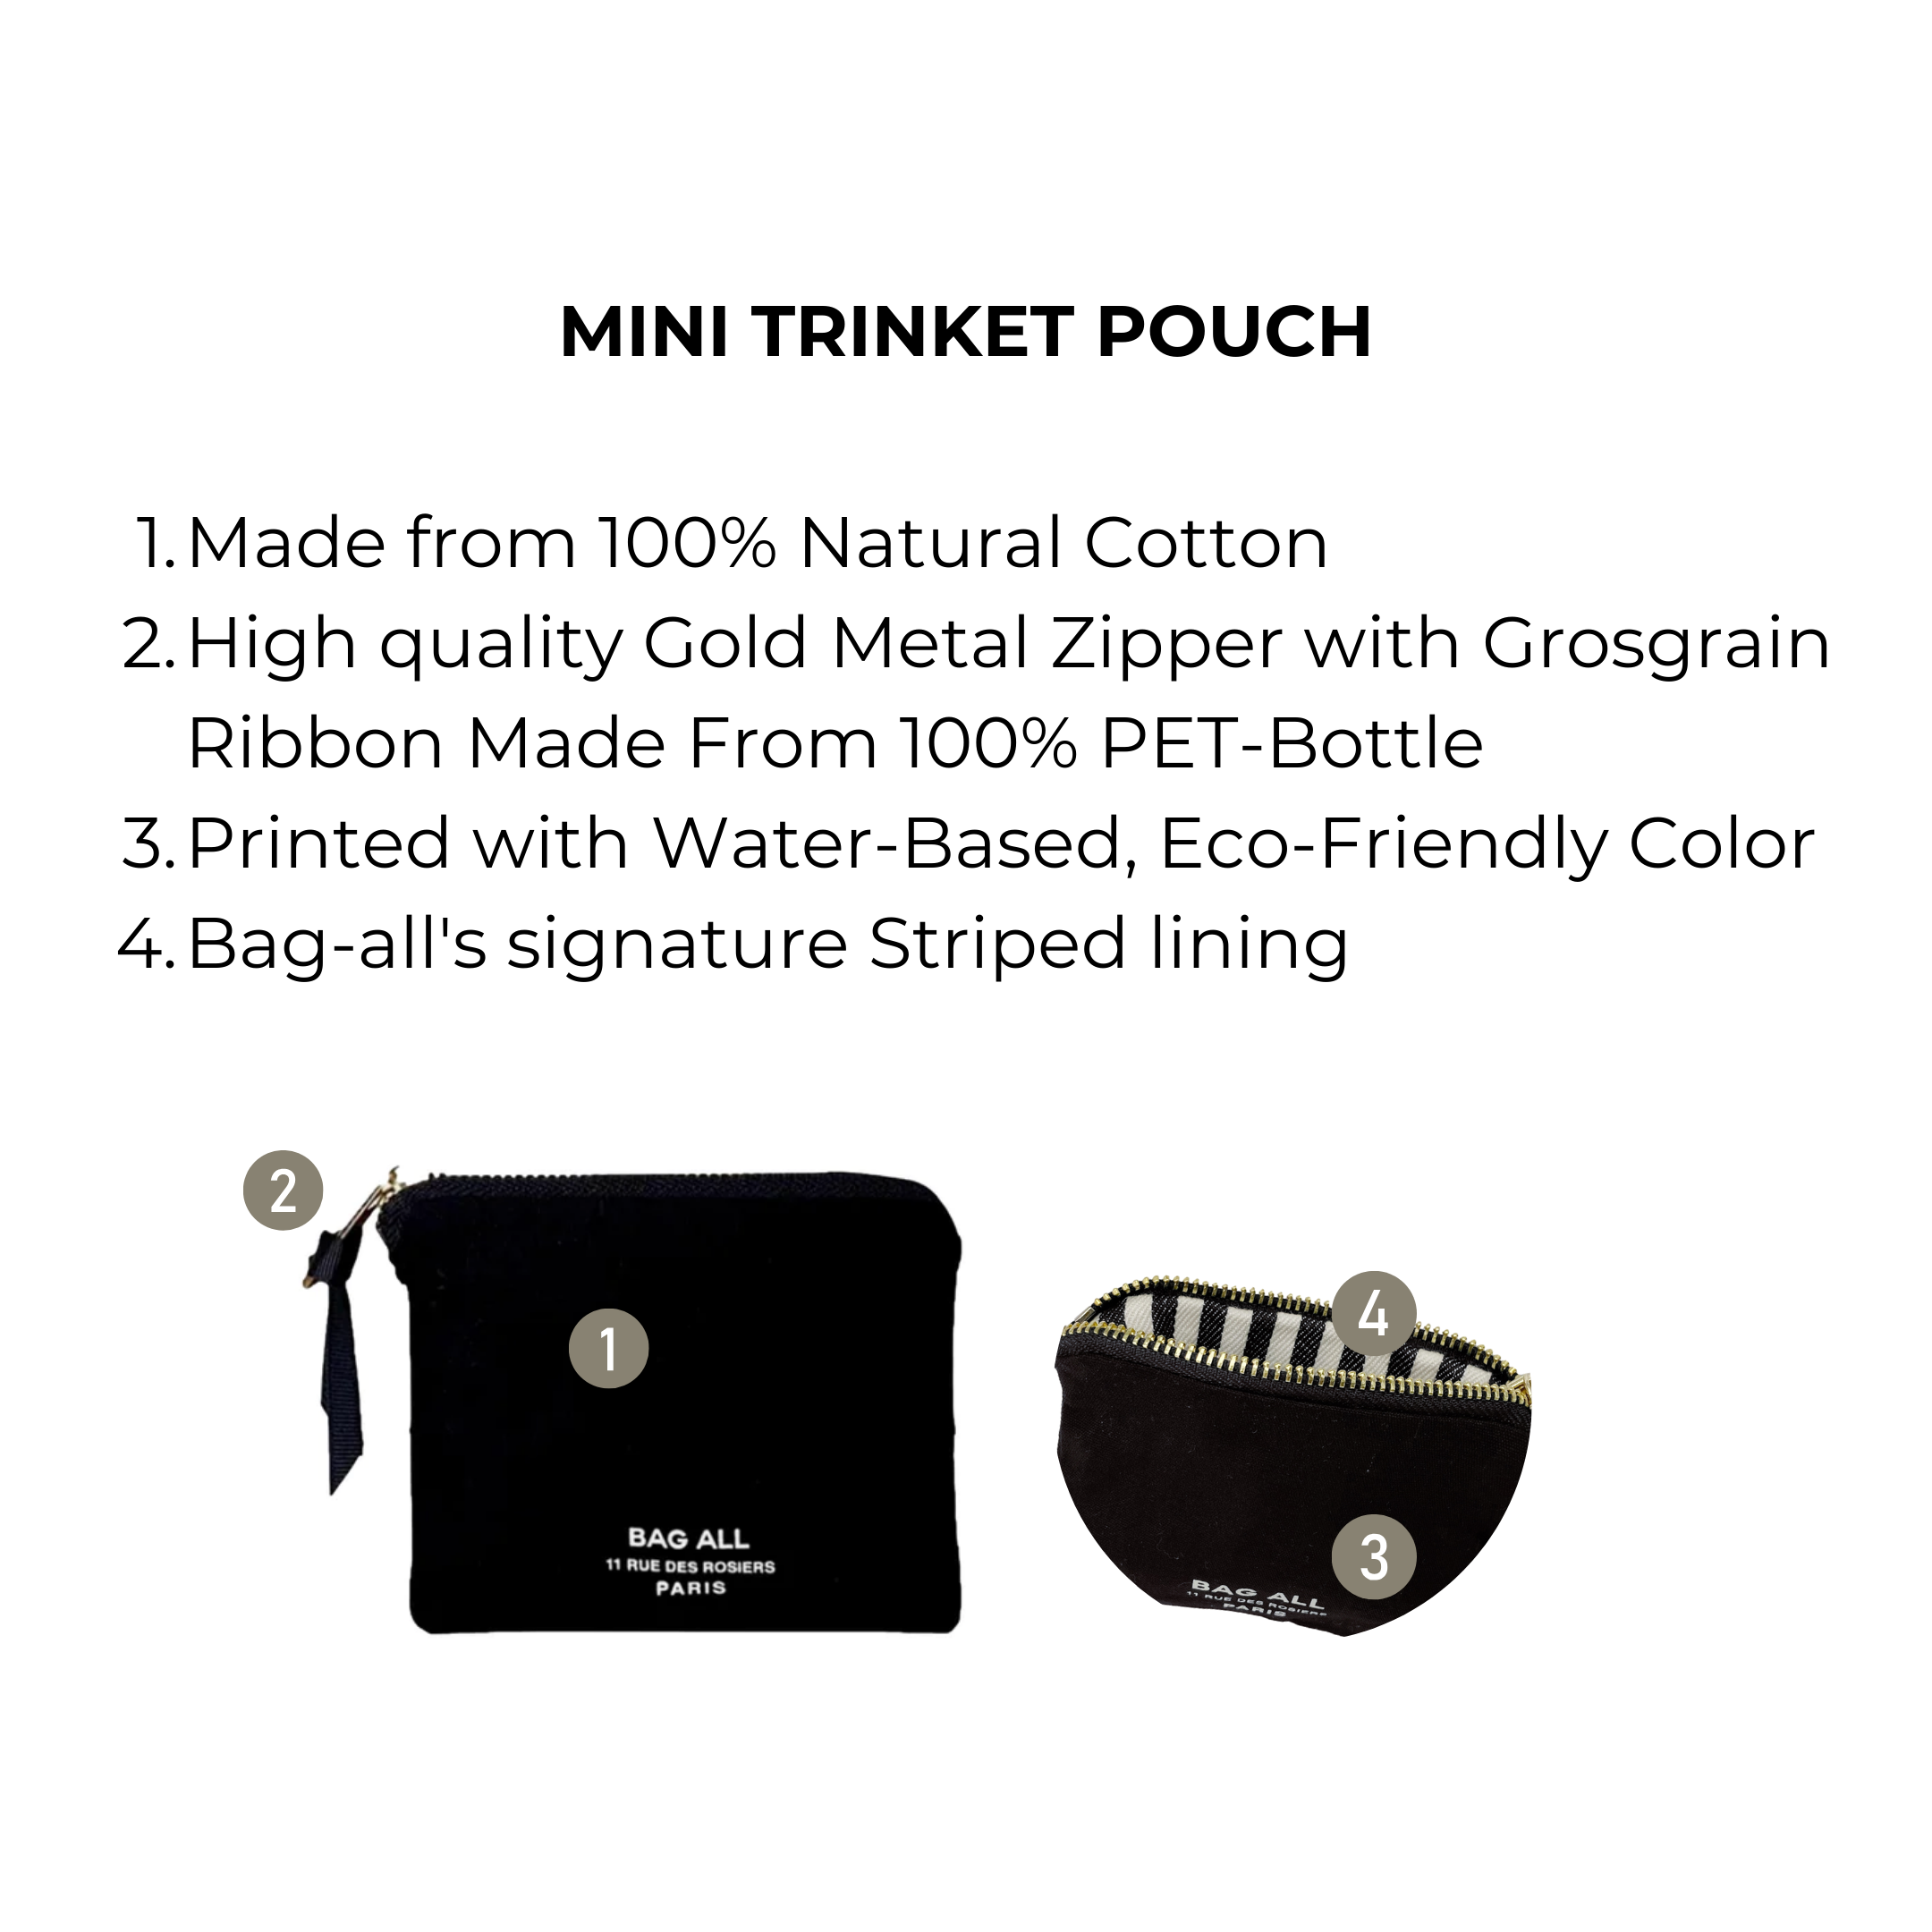 Mini Trinket Pouch, Black | Bag-all